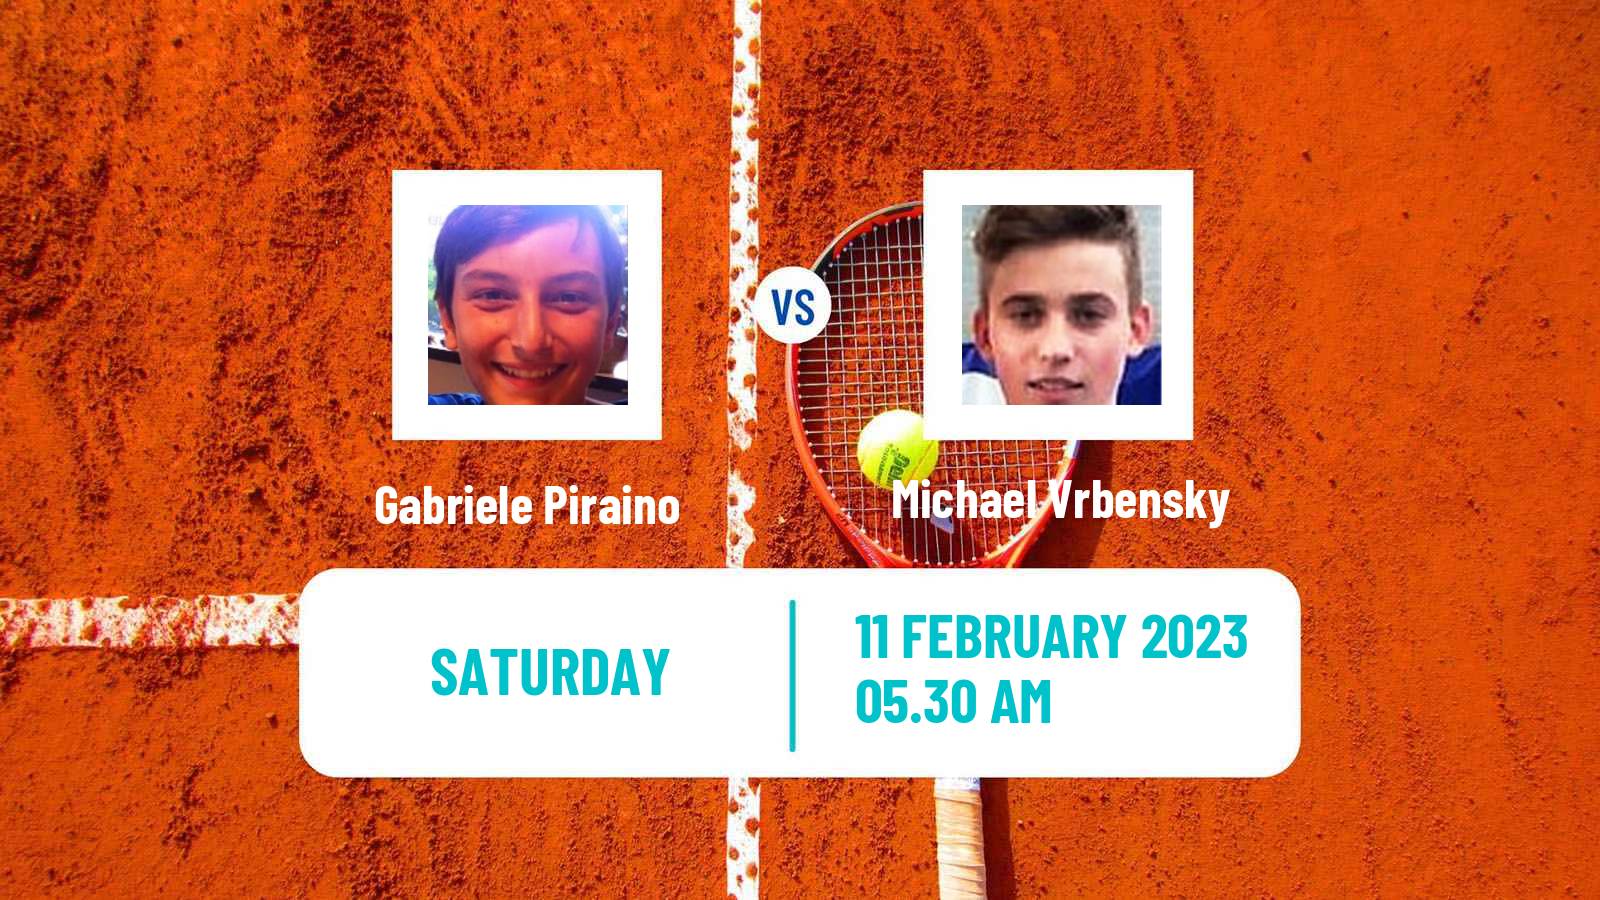 Tennis ITF Tournaments Gabriele Piraino - Michael Vrbensky